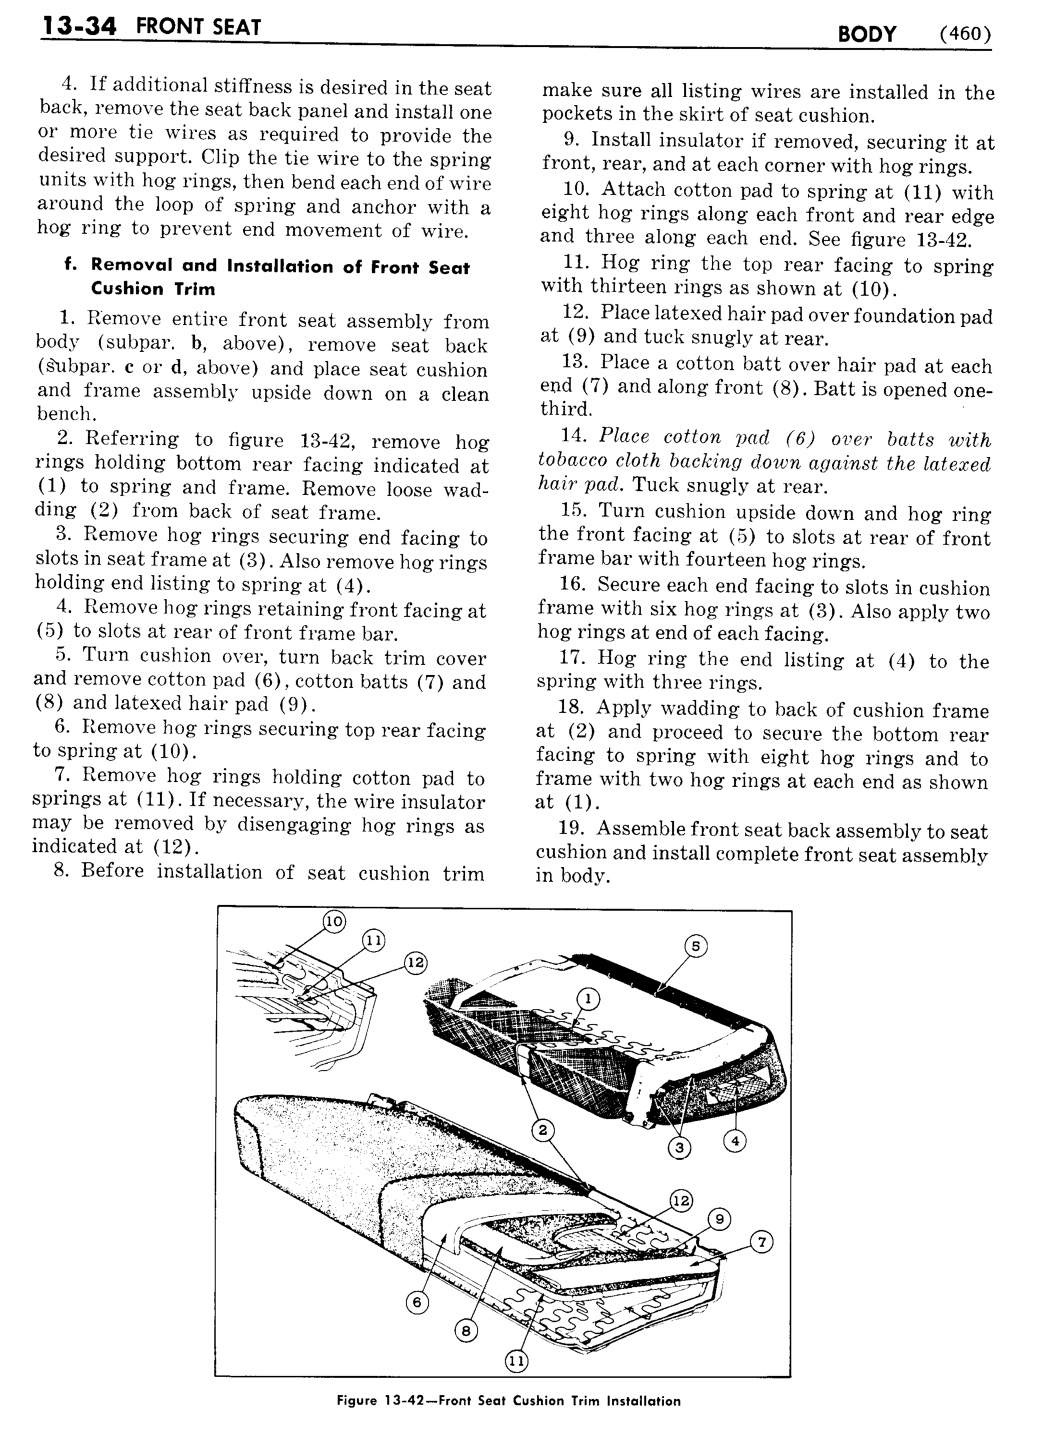 n_14 1951 Buick Shop Manual - Body-034-034.jpg